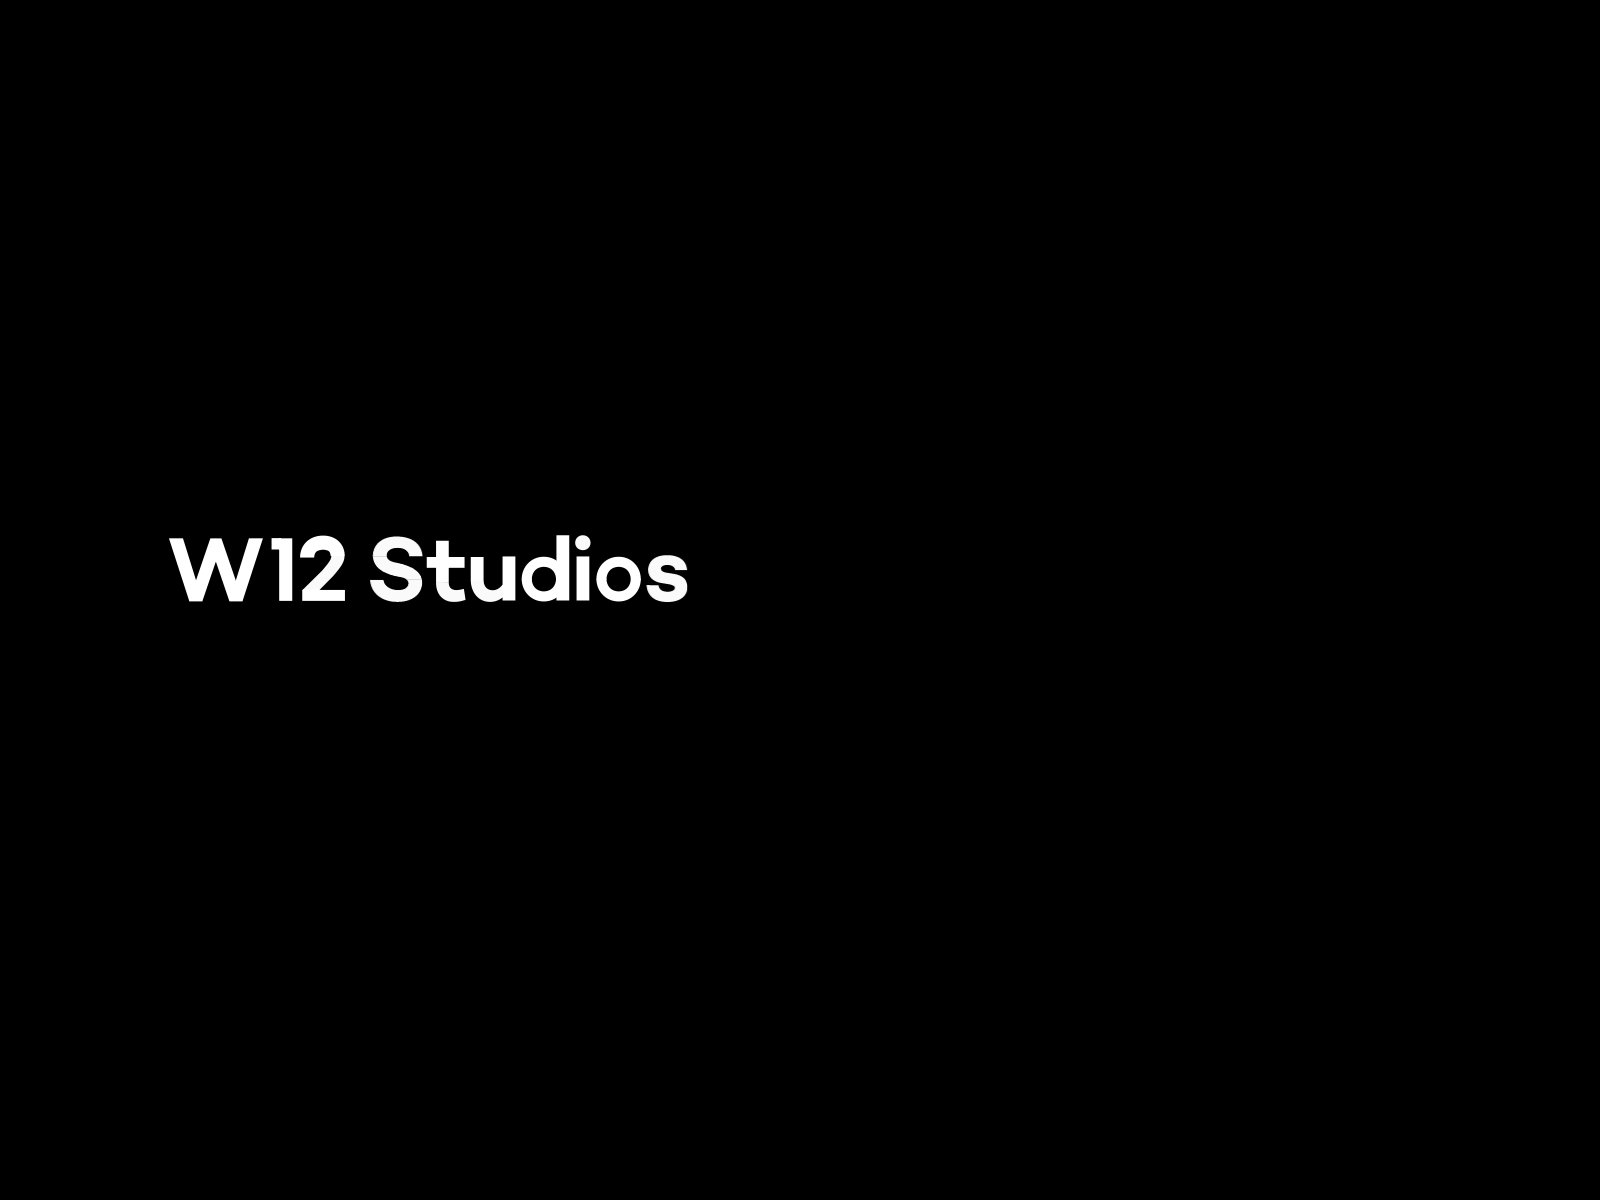 w12-studios-ident-by-jonathan-alsop-on-dribbble